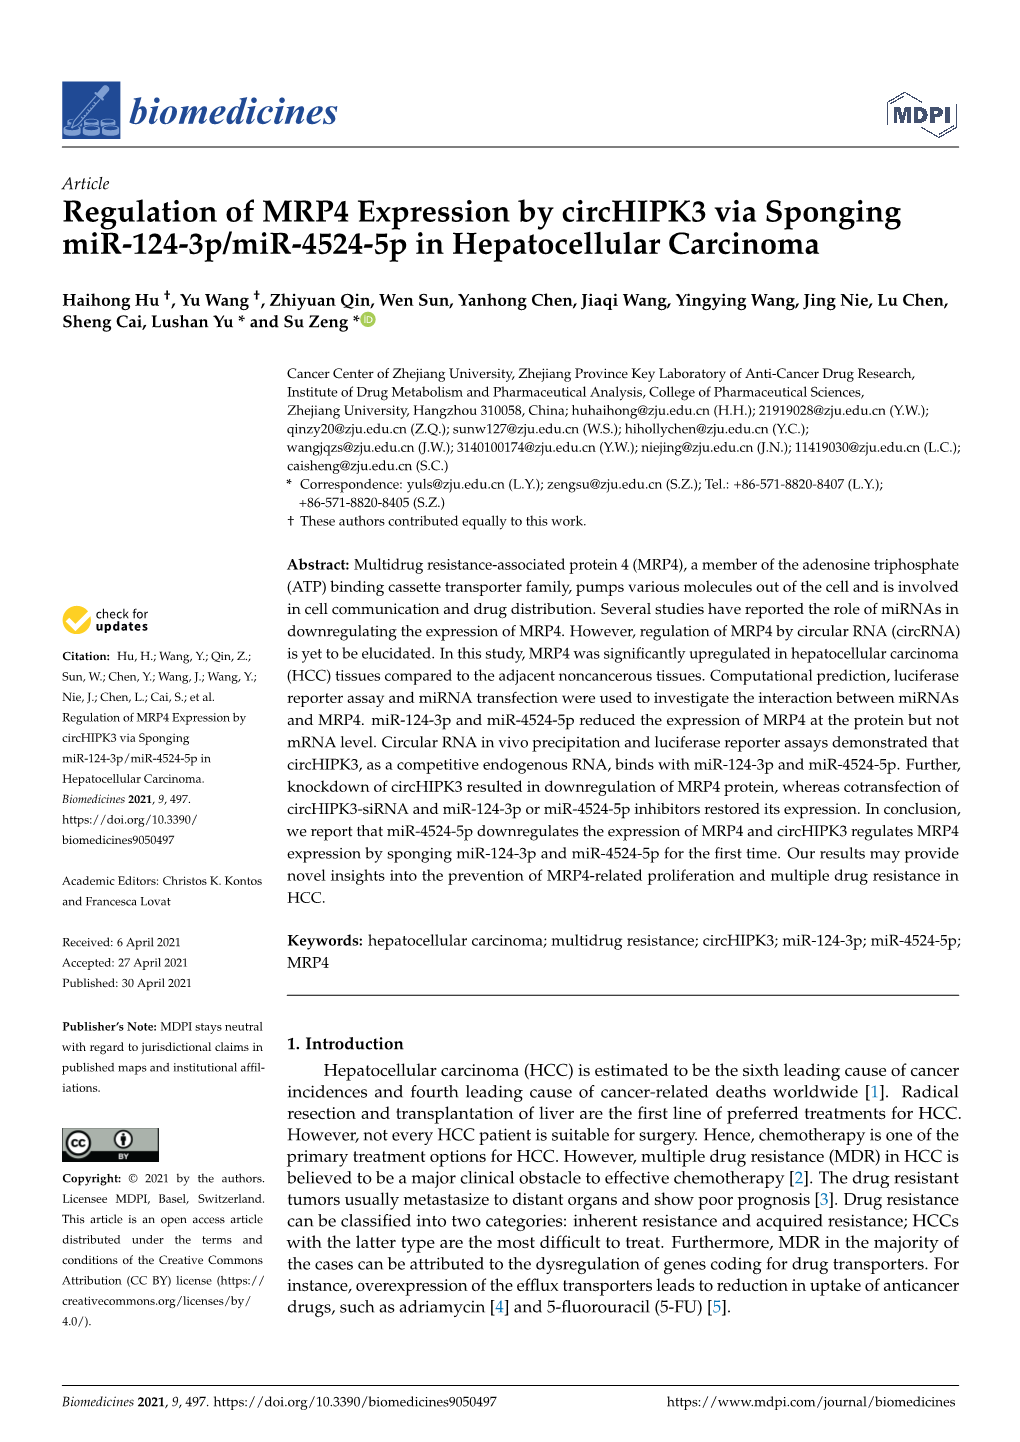 Regulation of MRP4 Expression by Circhipk3 Via Sponging Mir-124-3P/Mir-4524-5P in Hepatocellular Carcinoma